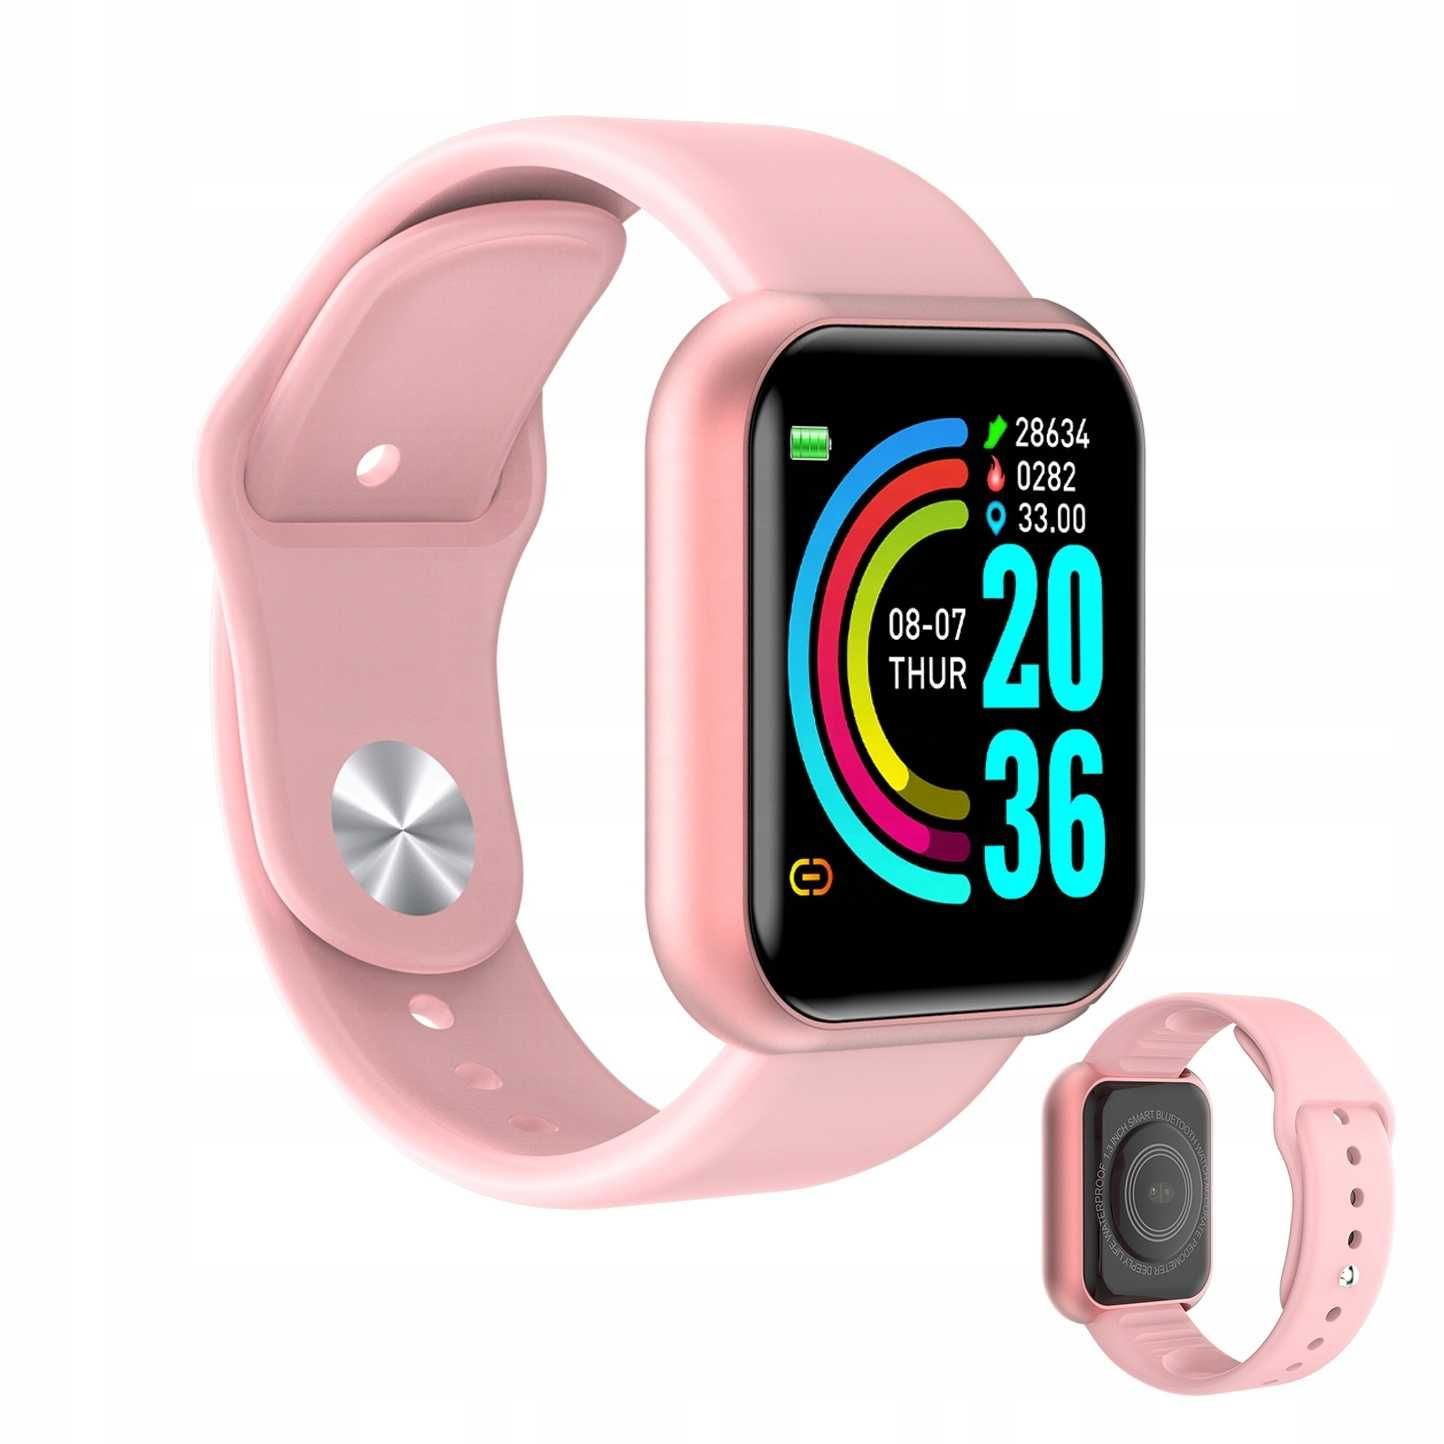 Smartwatch - inteligentna opaska, różowy smartwatch + DRUGI GRATIS!